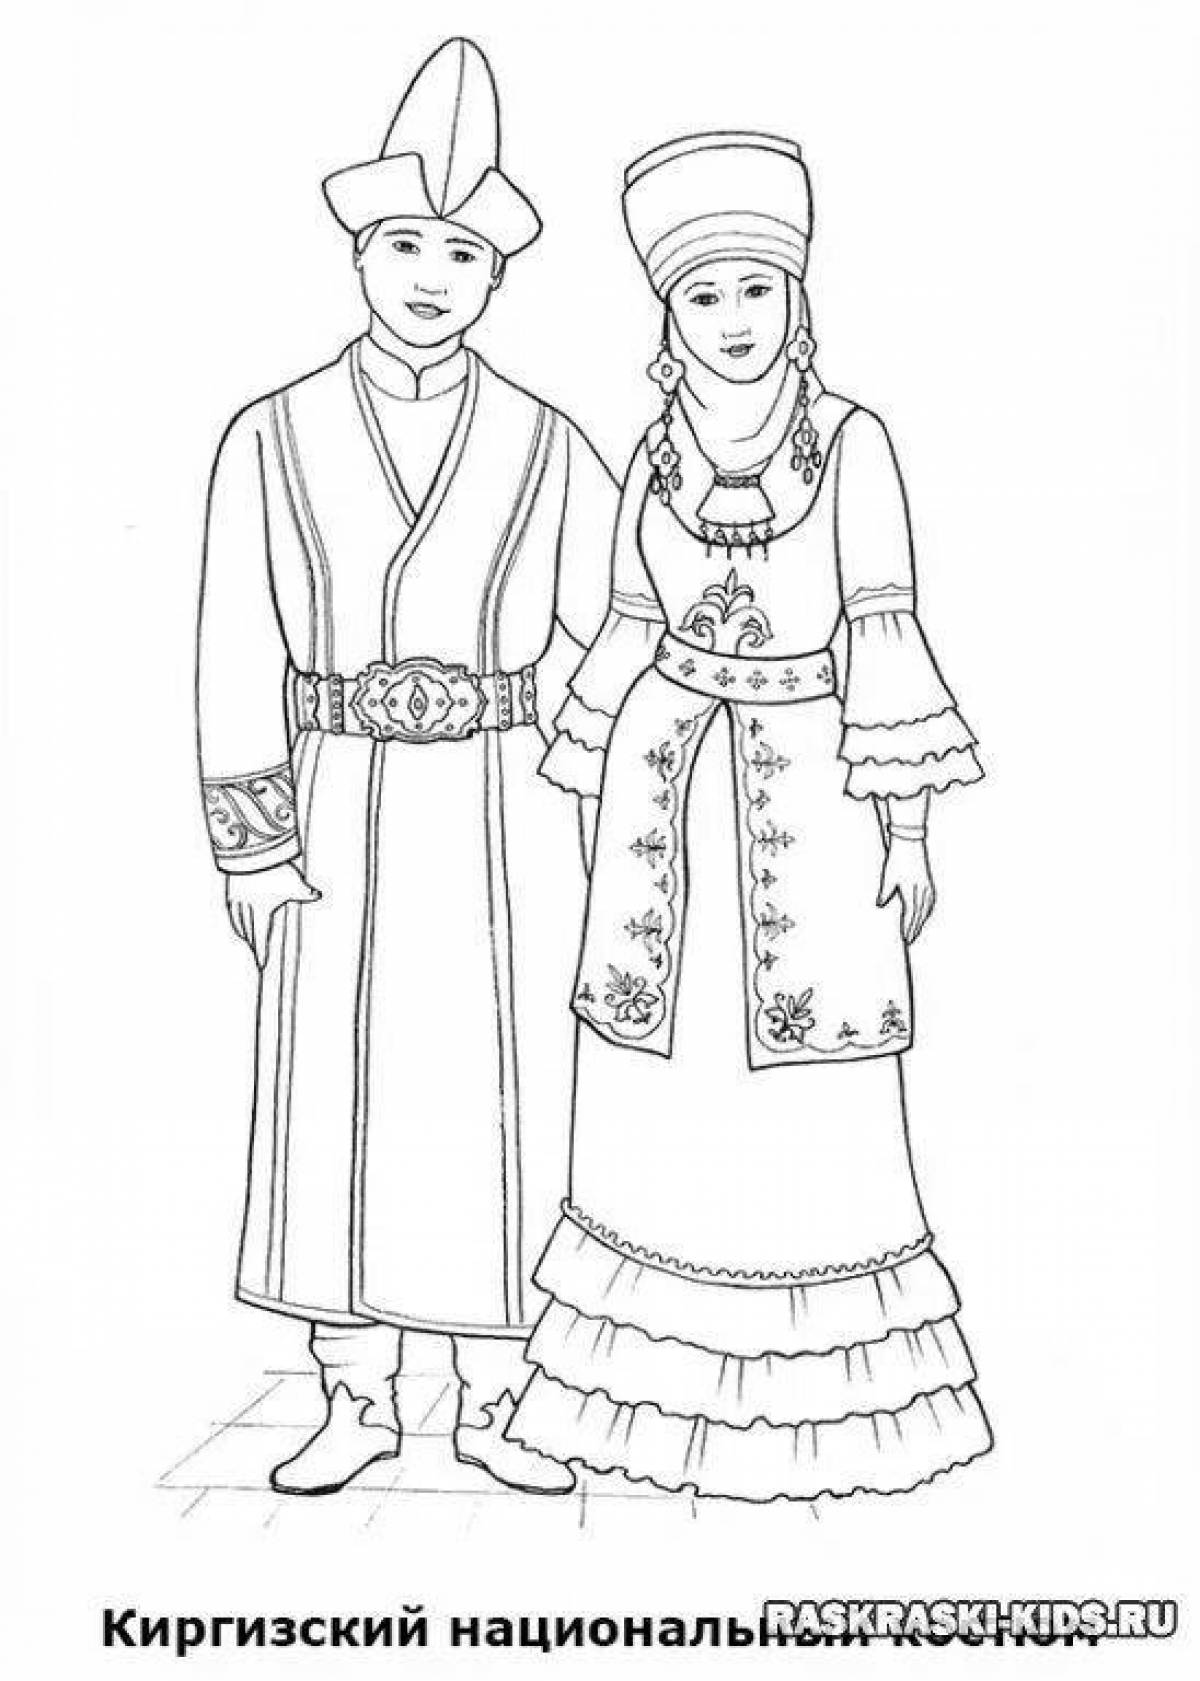 Kazakh national costume #1